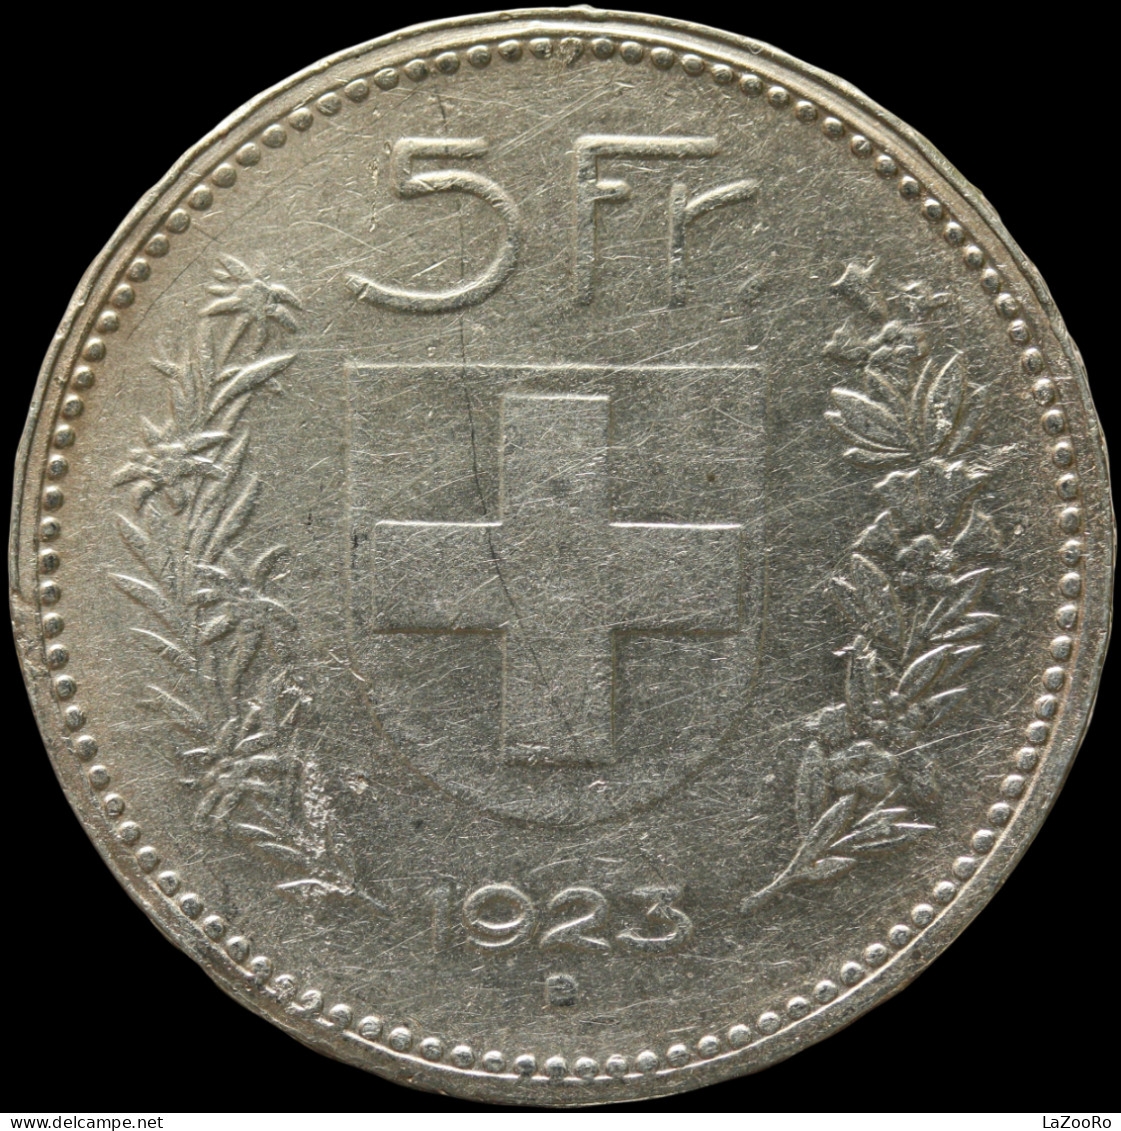 LaZooRo: Switzerland 5 Francs 1923 VF / XF - Silver - 5 Francs